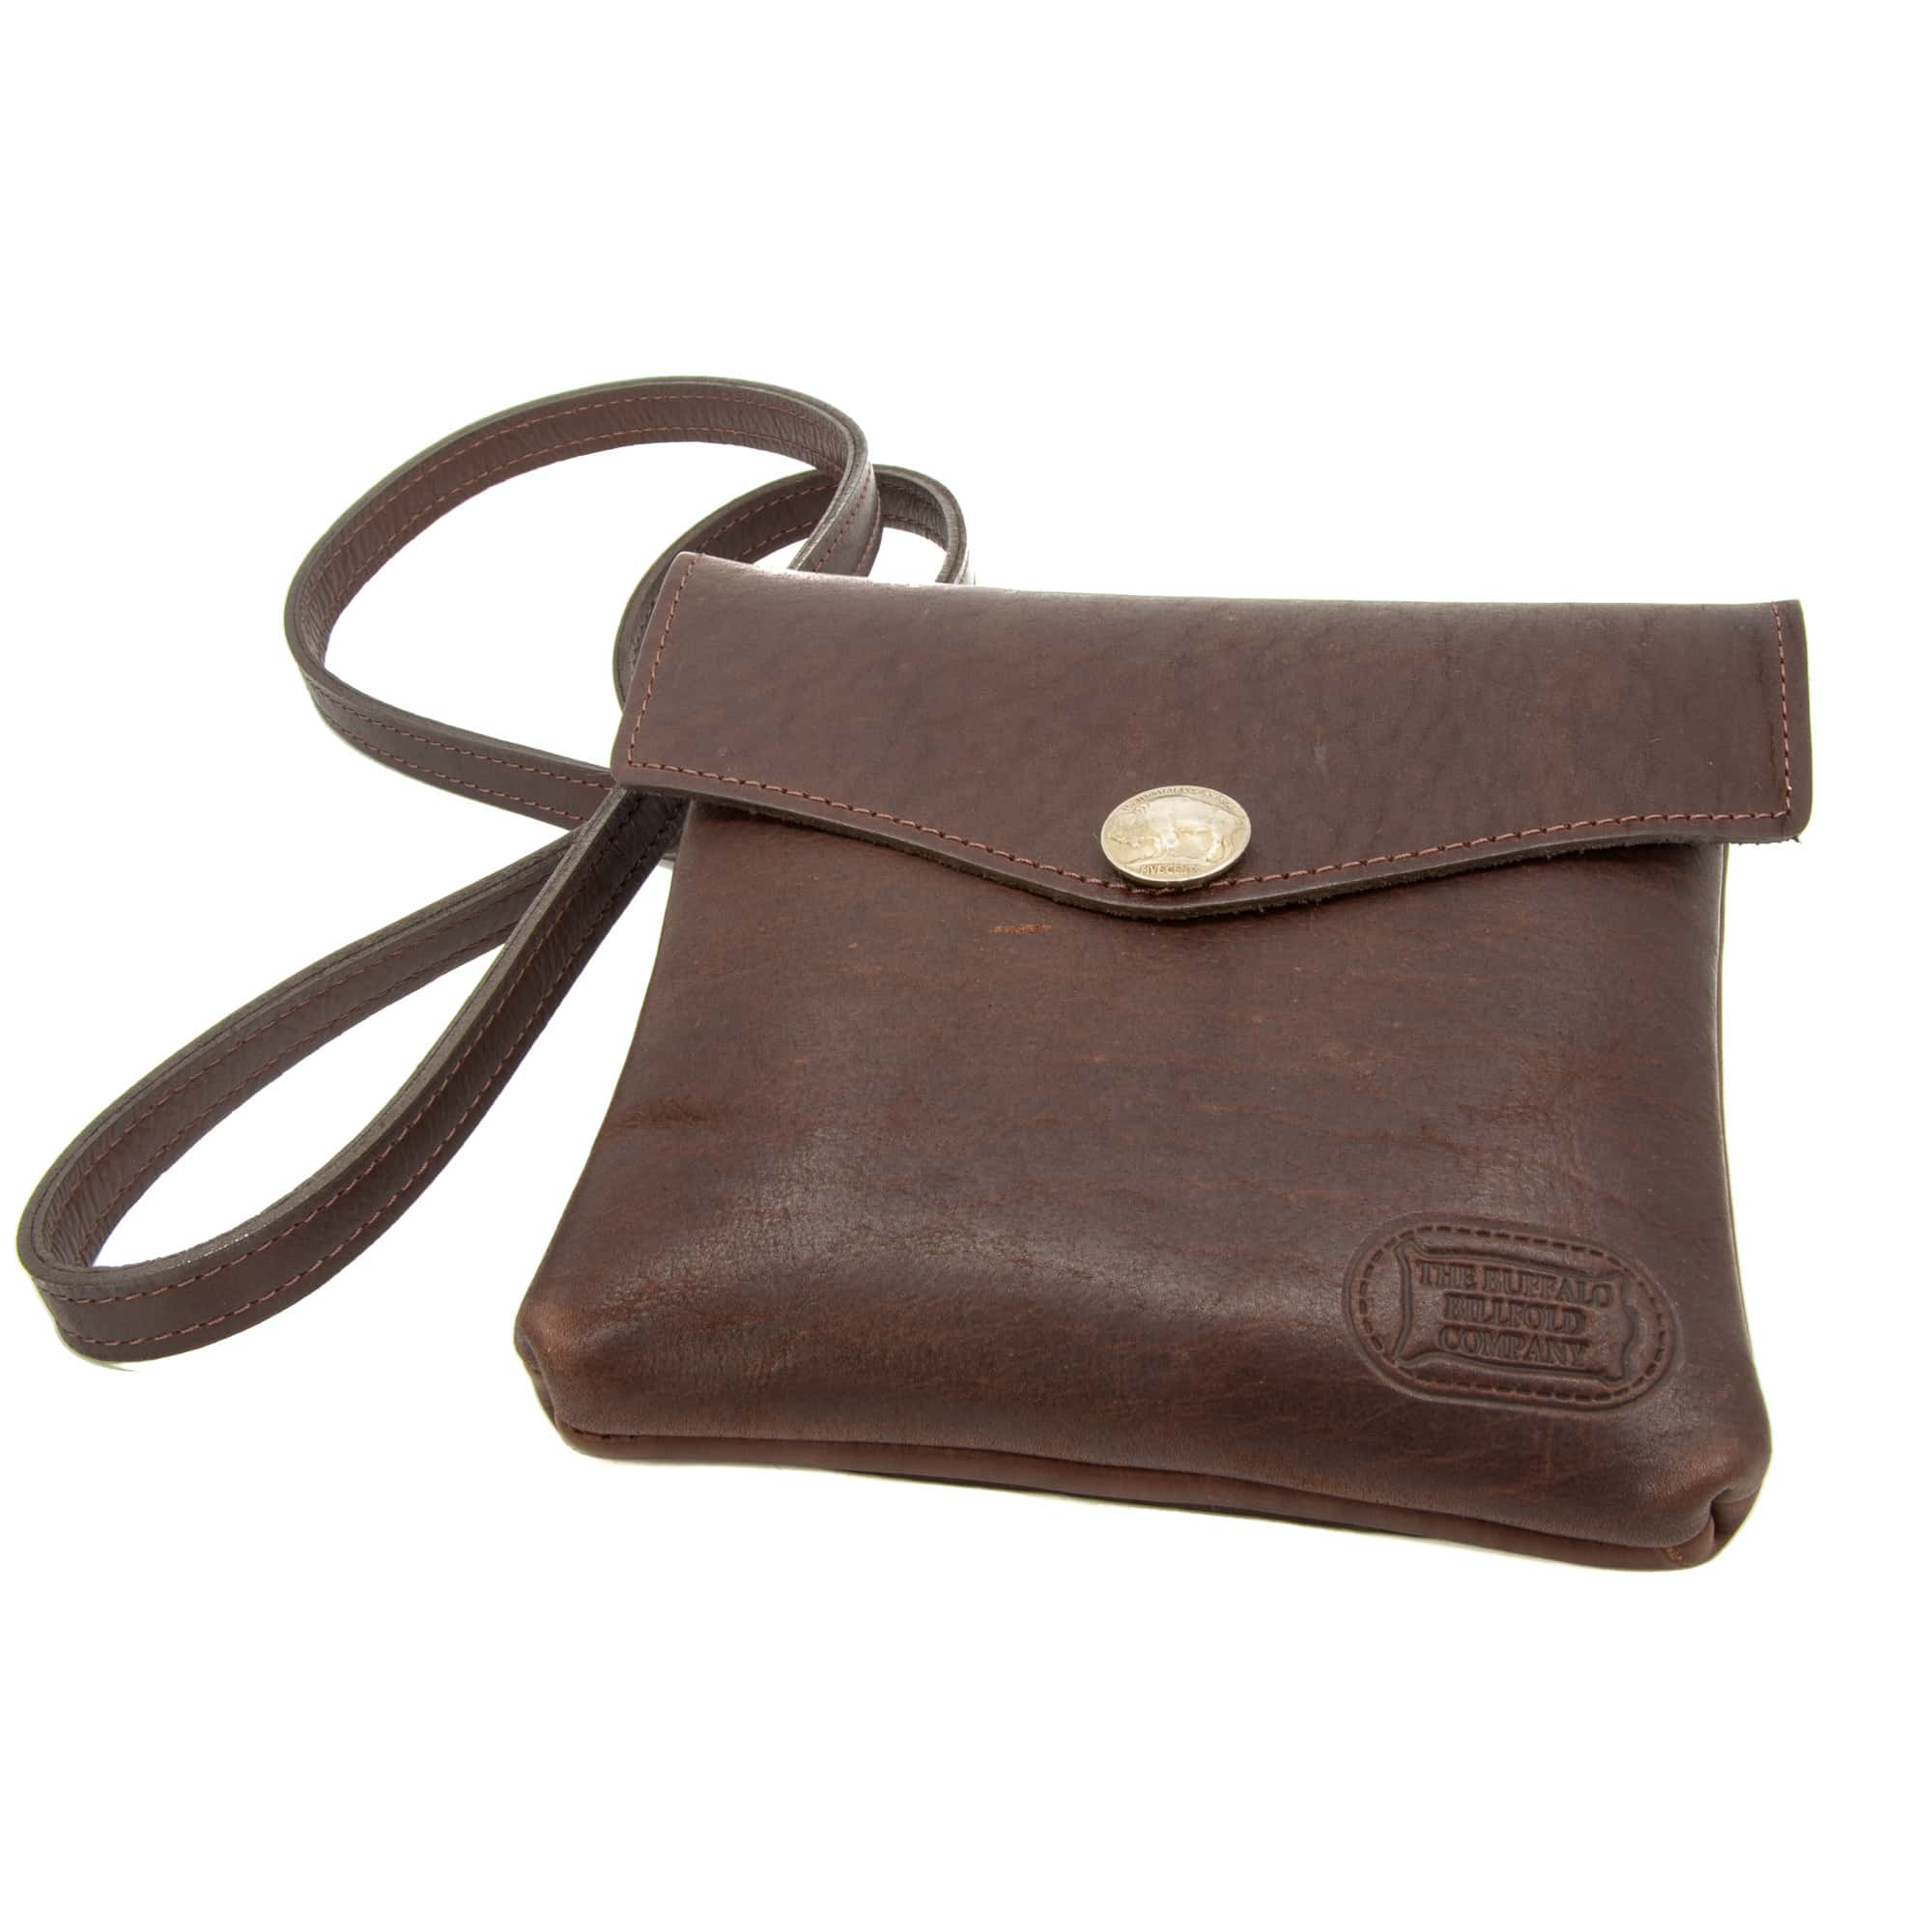 With instruction- Sewing pattern / saddle bag patterns PDF BXK-07 LZpattern  design hand stitched leather